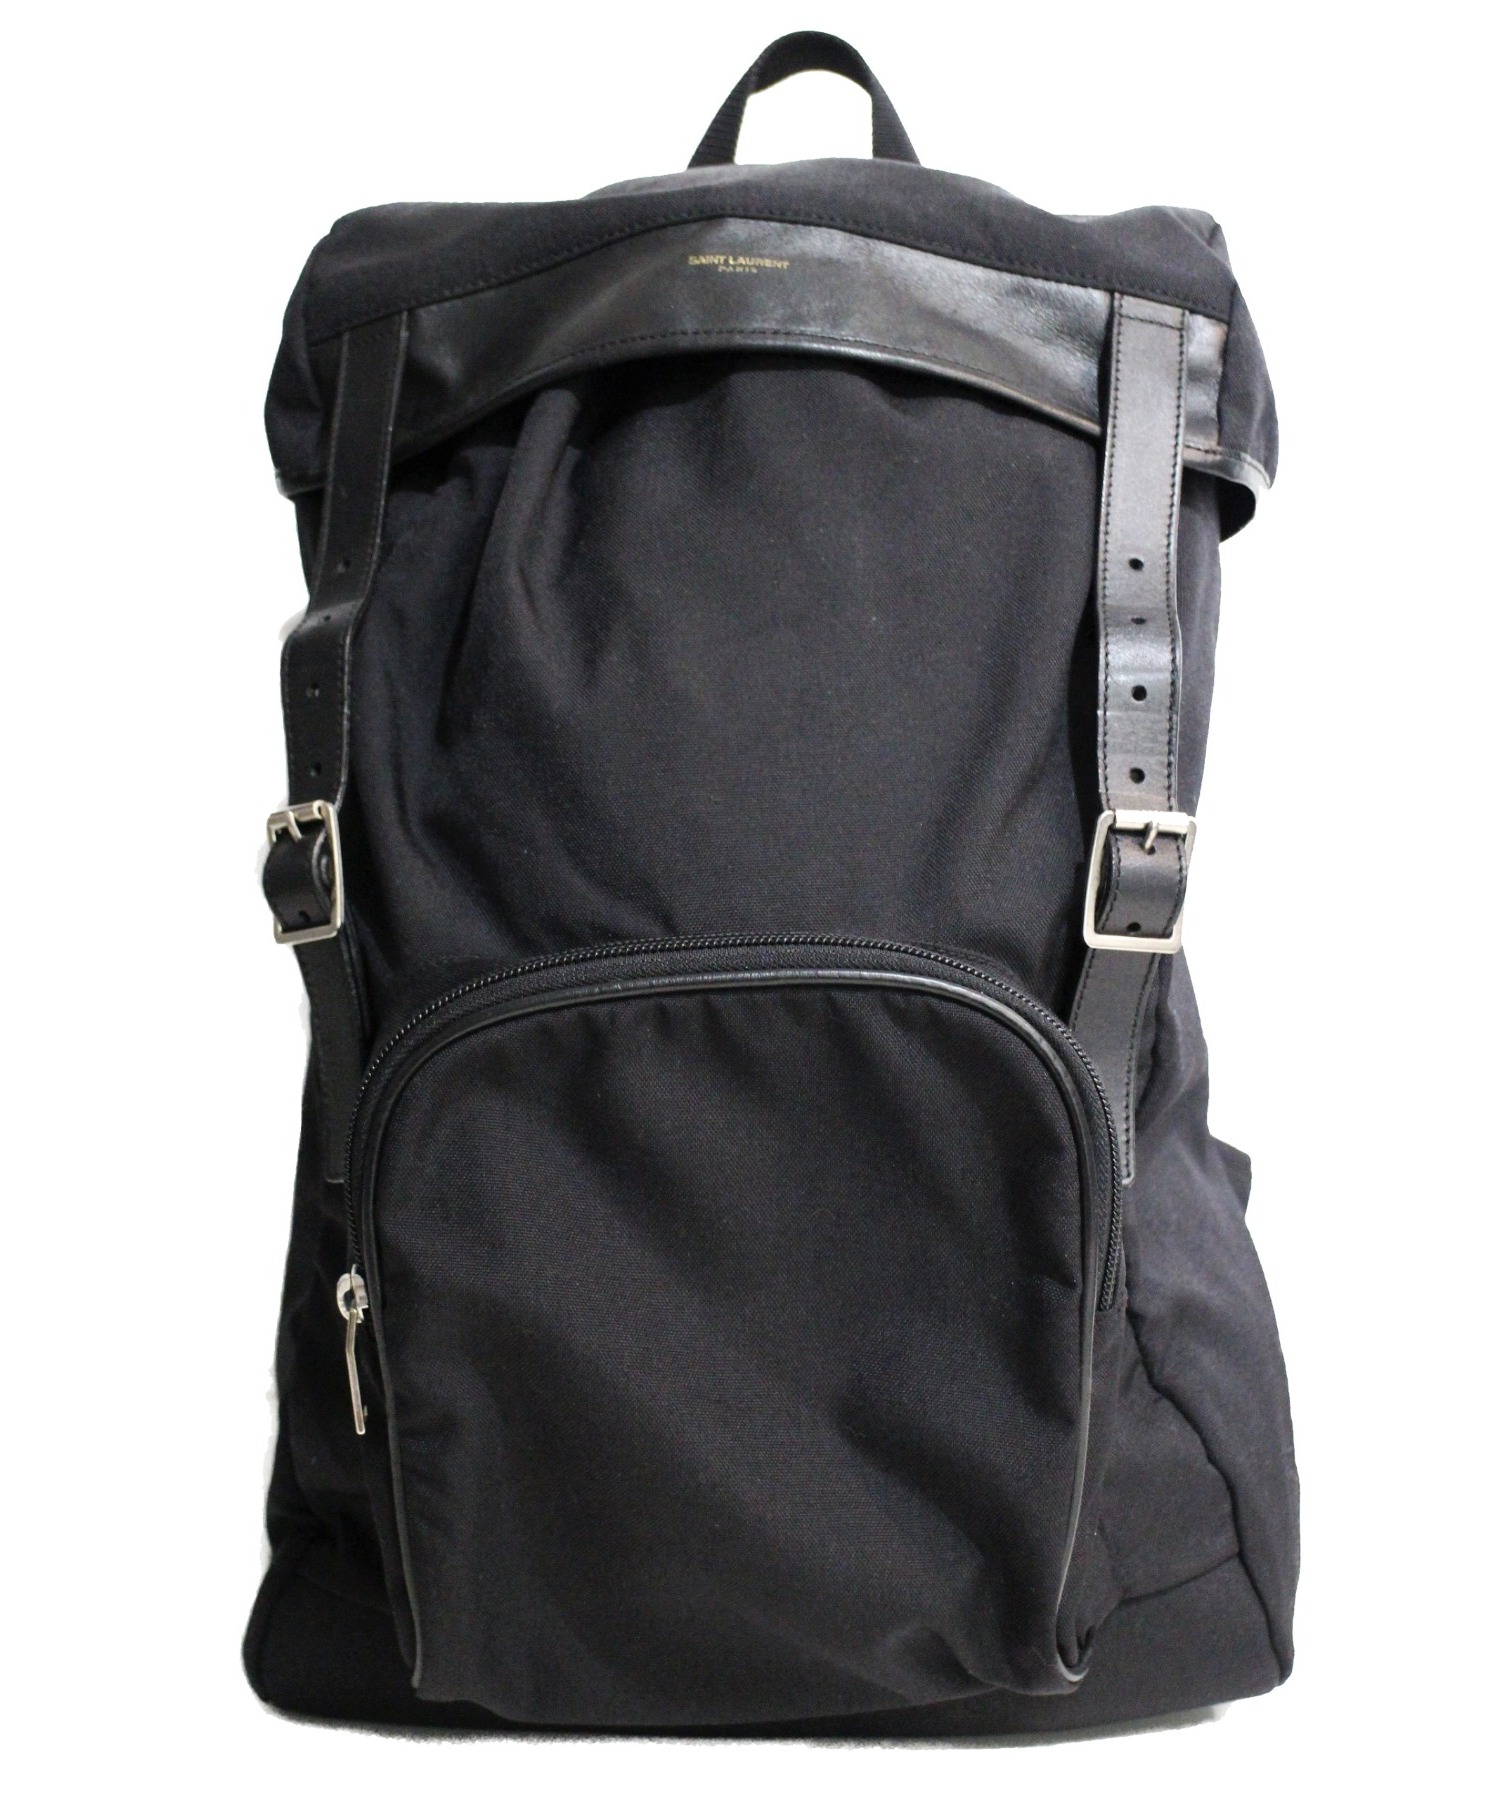 Saint Laurent Paris (サンローランパリ) Canvas Hunting Backpack ブラック サイズ:-  PMR342609-1113